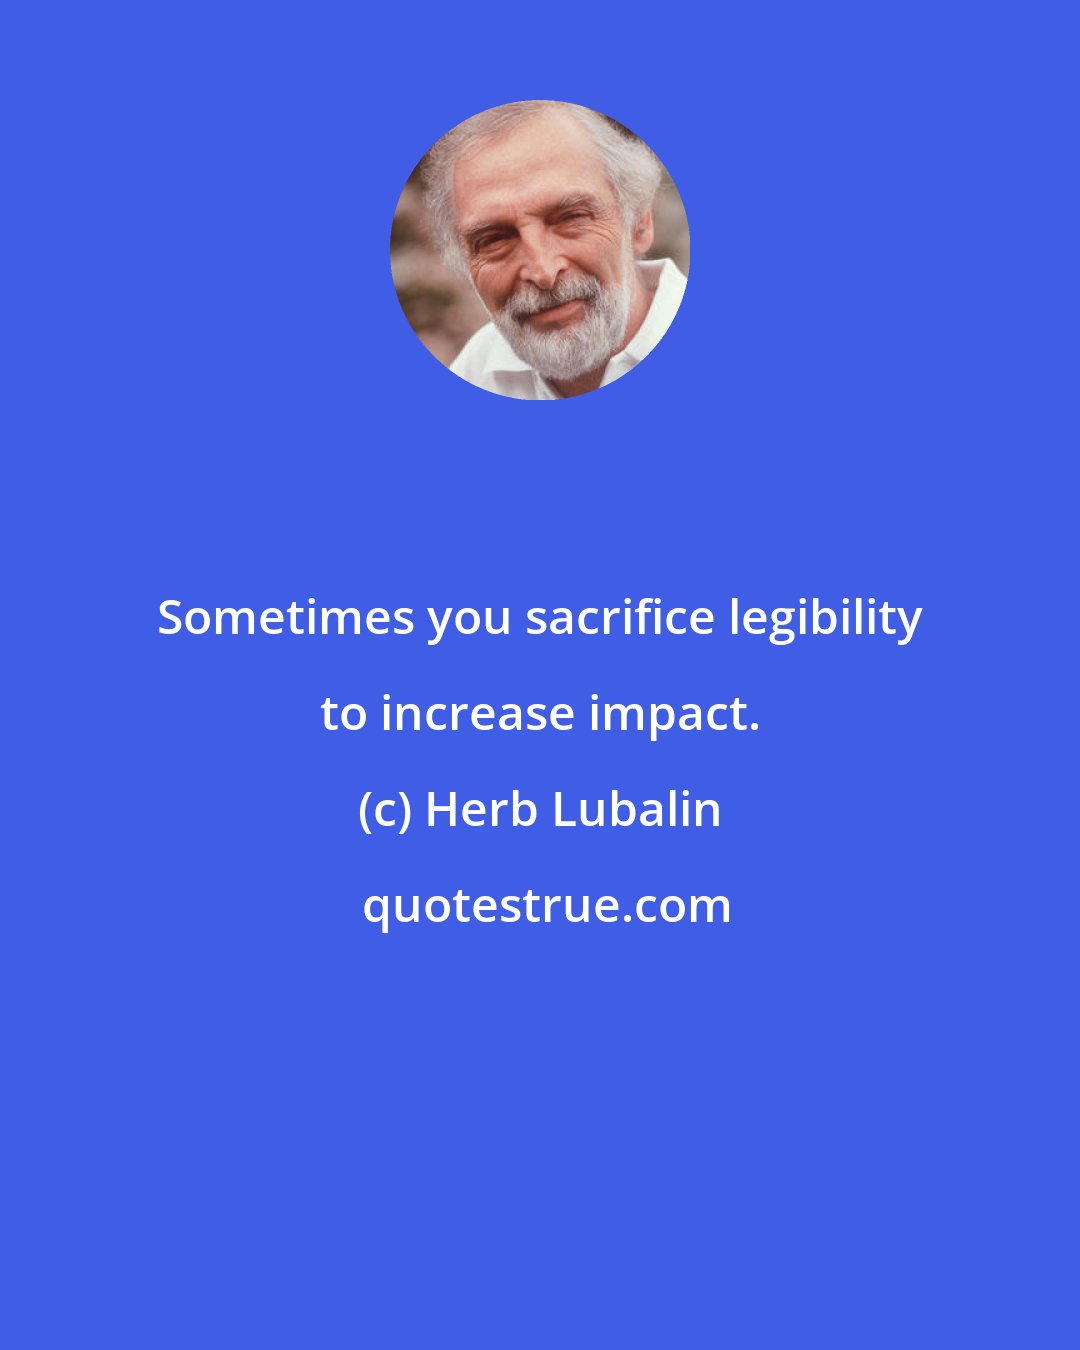 Herb Lubalin: Sometimes you sacrifice legibility to increase impact.